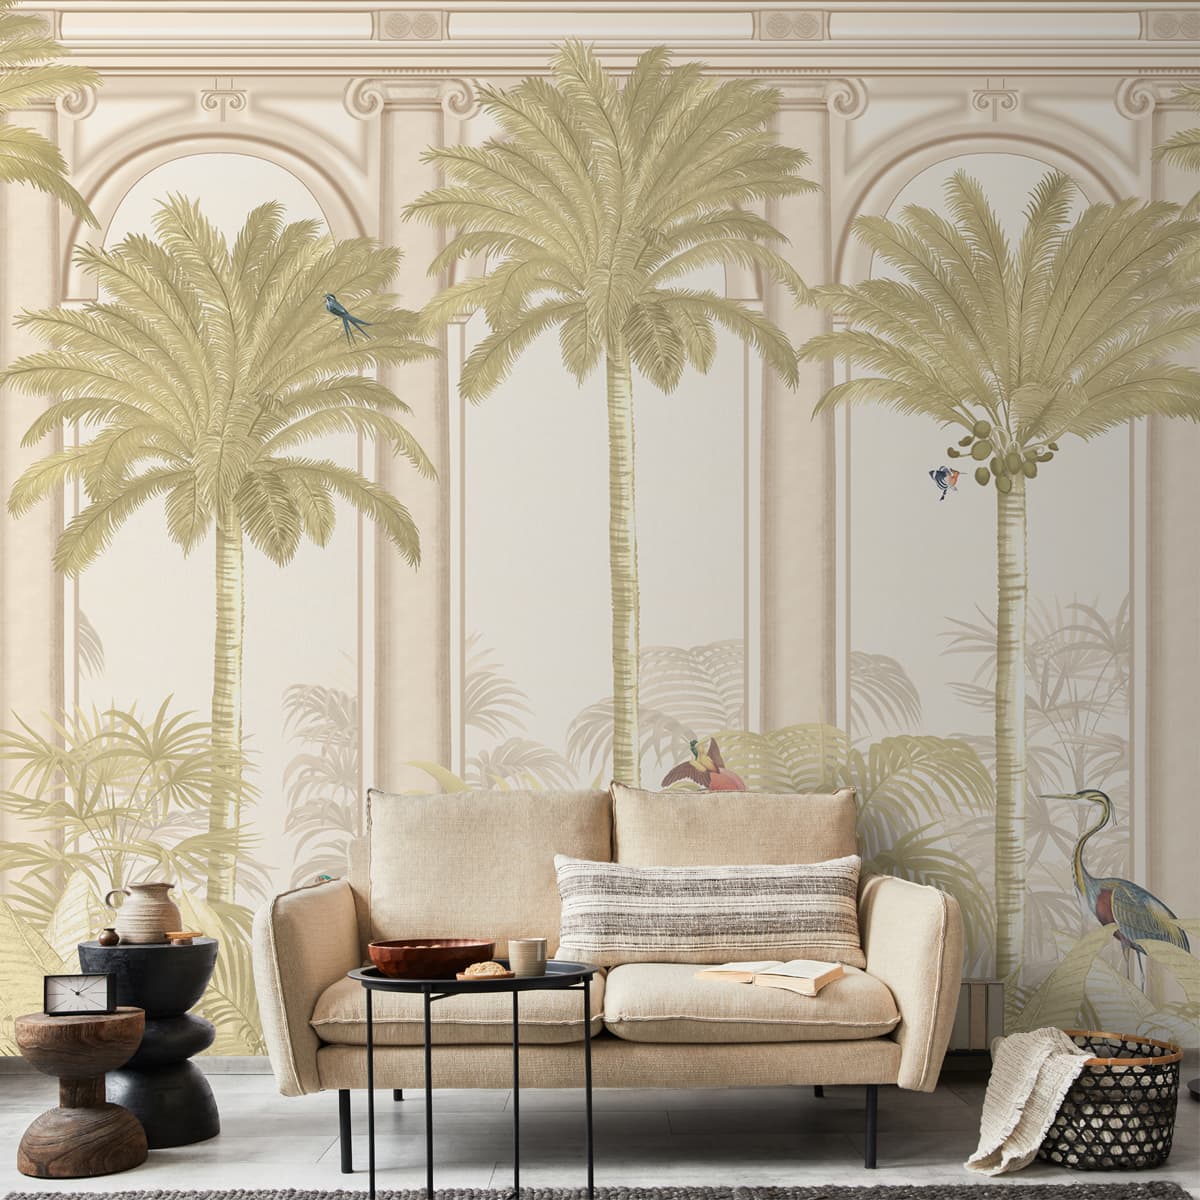 Malang, Tropical Theme Wallpaper for Walls